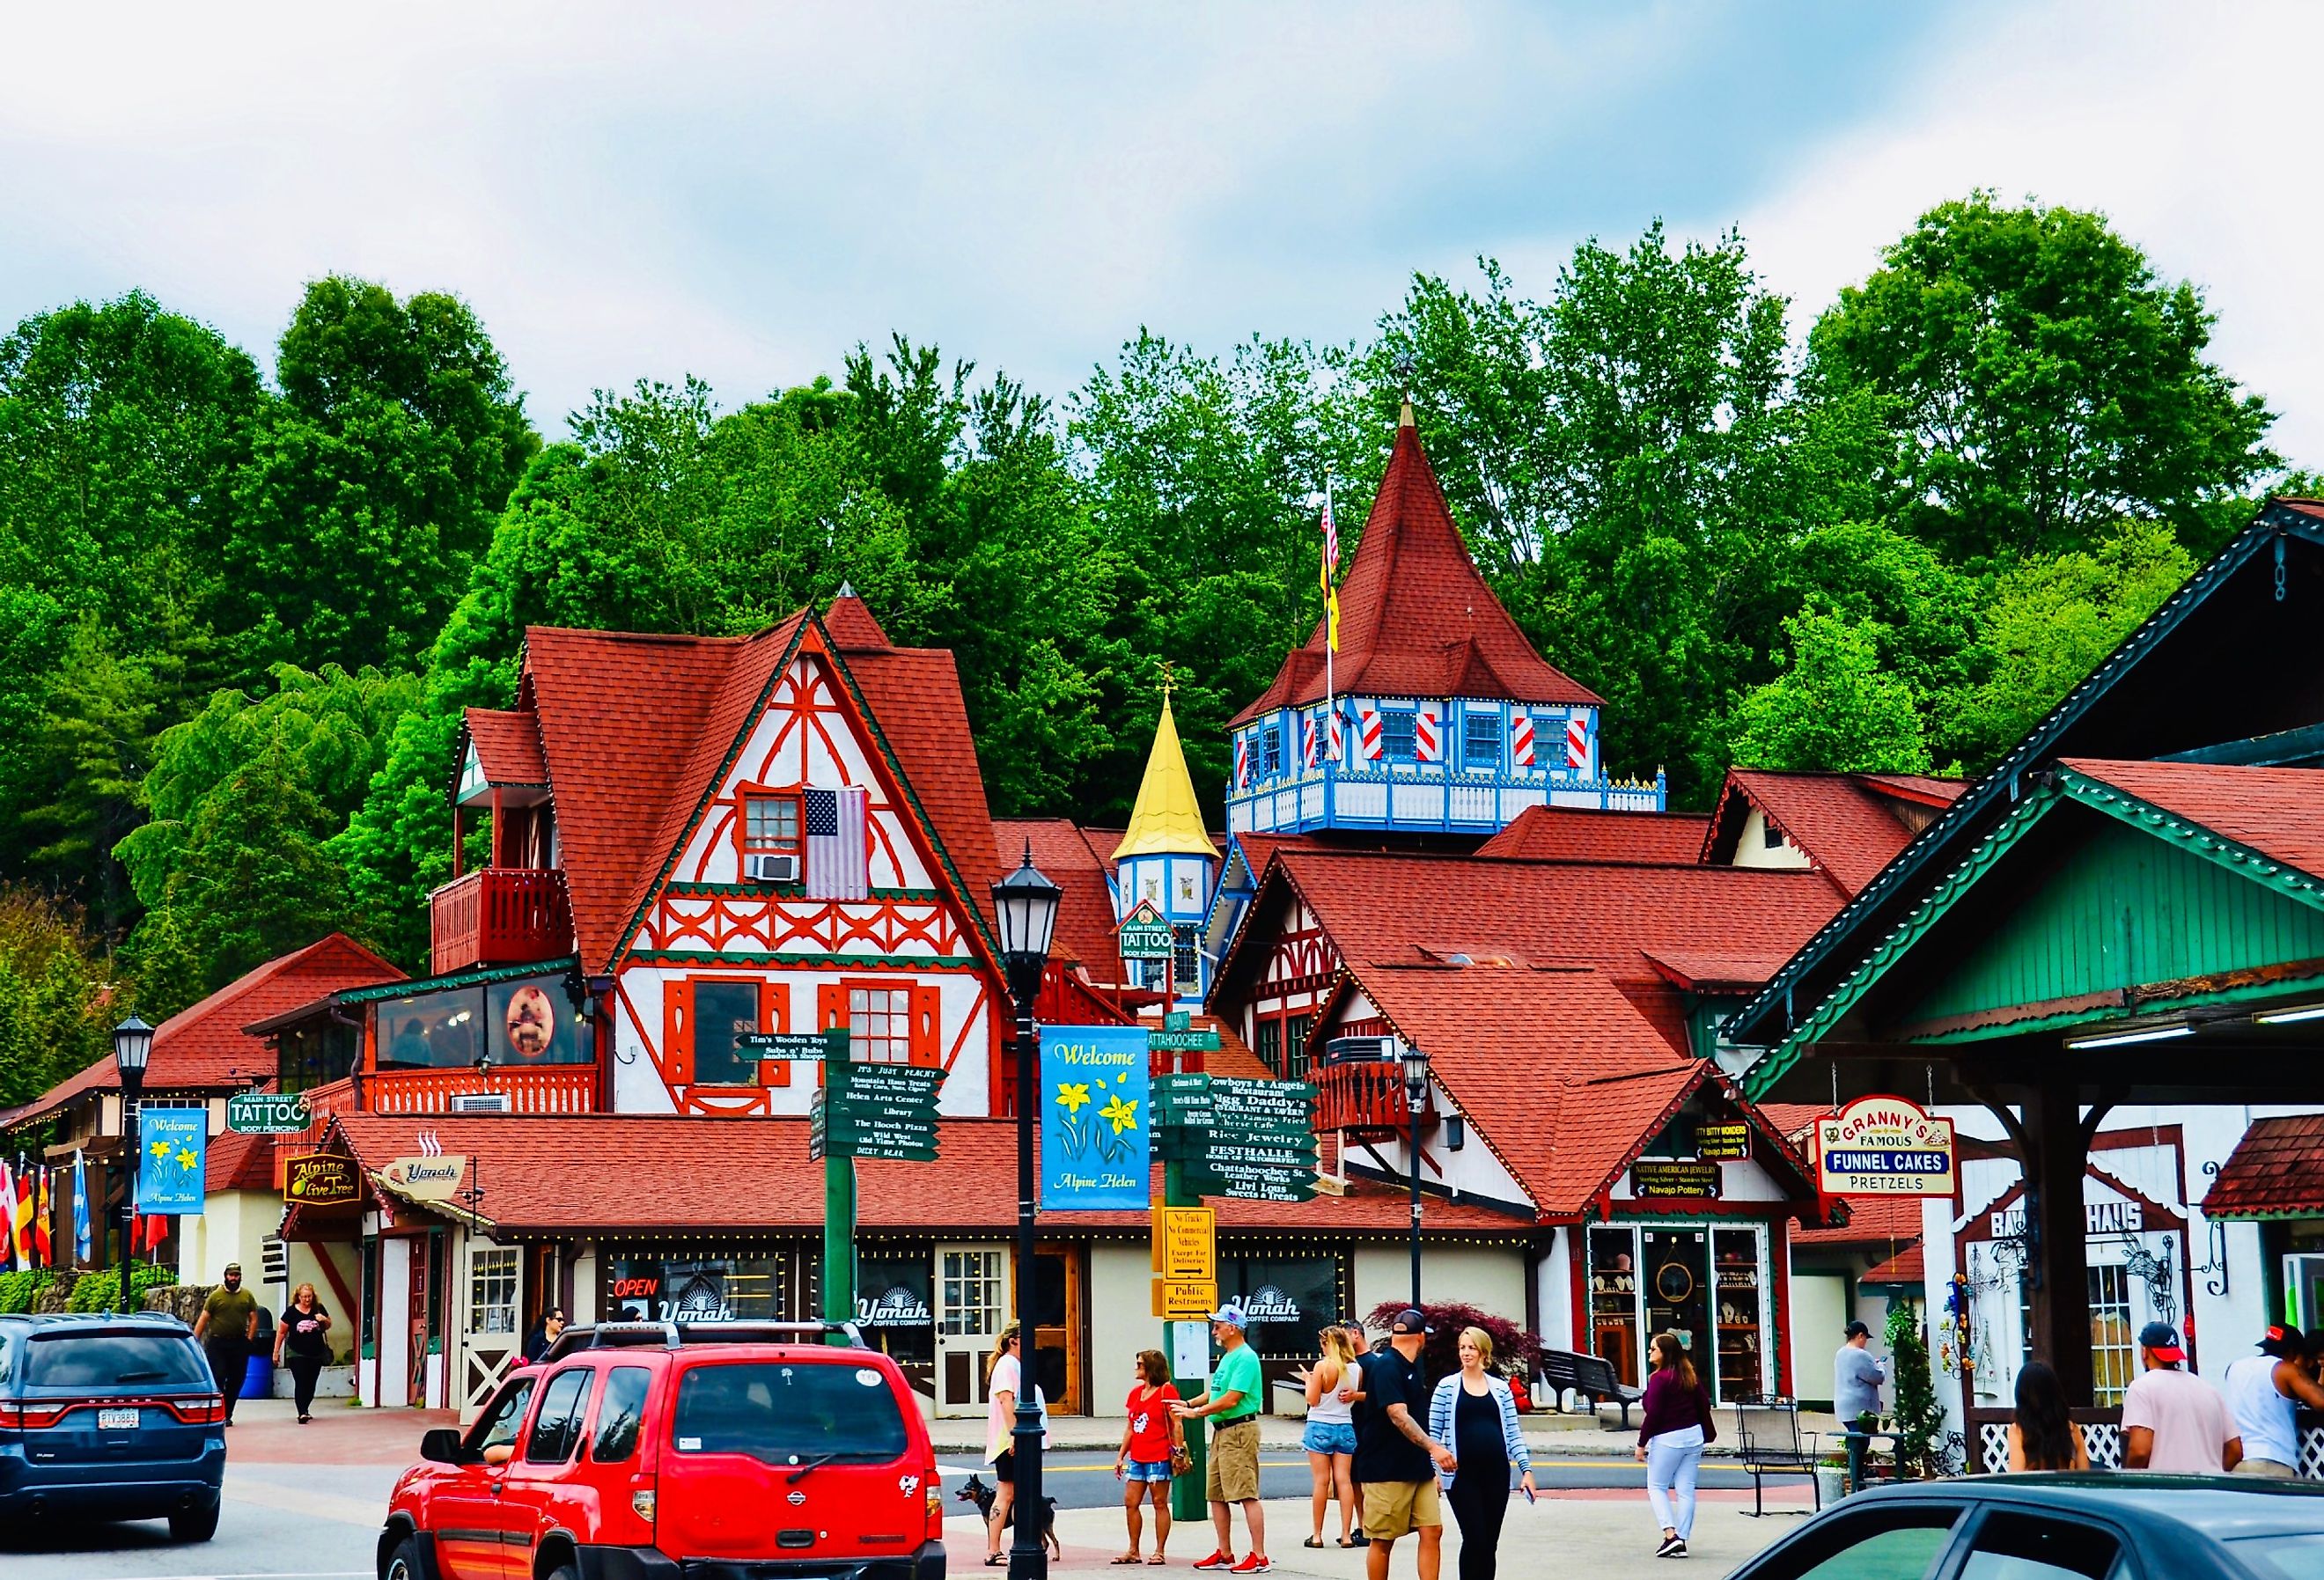 Bavarian-style buildings in Helen, Georgia. Image credit PQK via Shutterstock